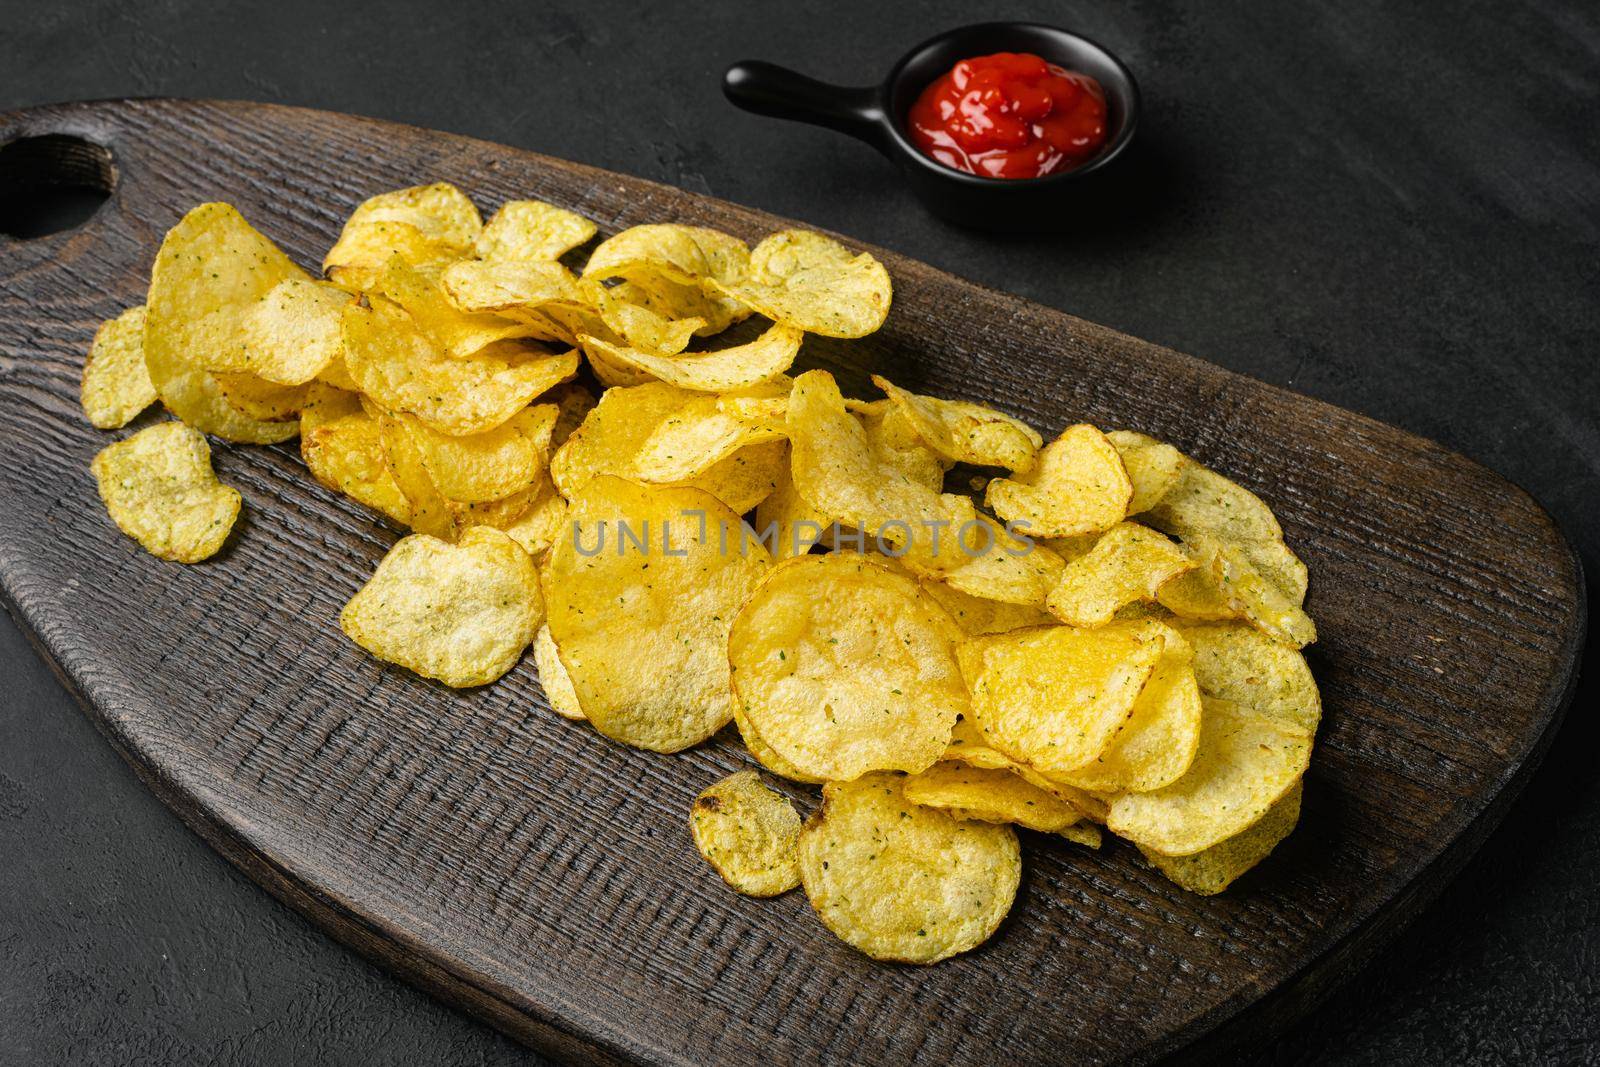 Crispy potato chips on black dark stone table background by Ilianesolenyi